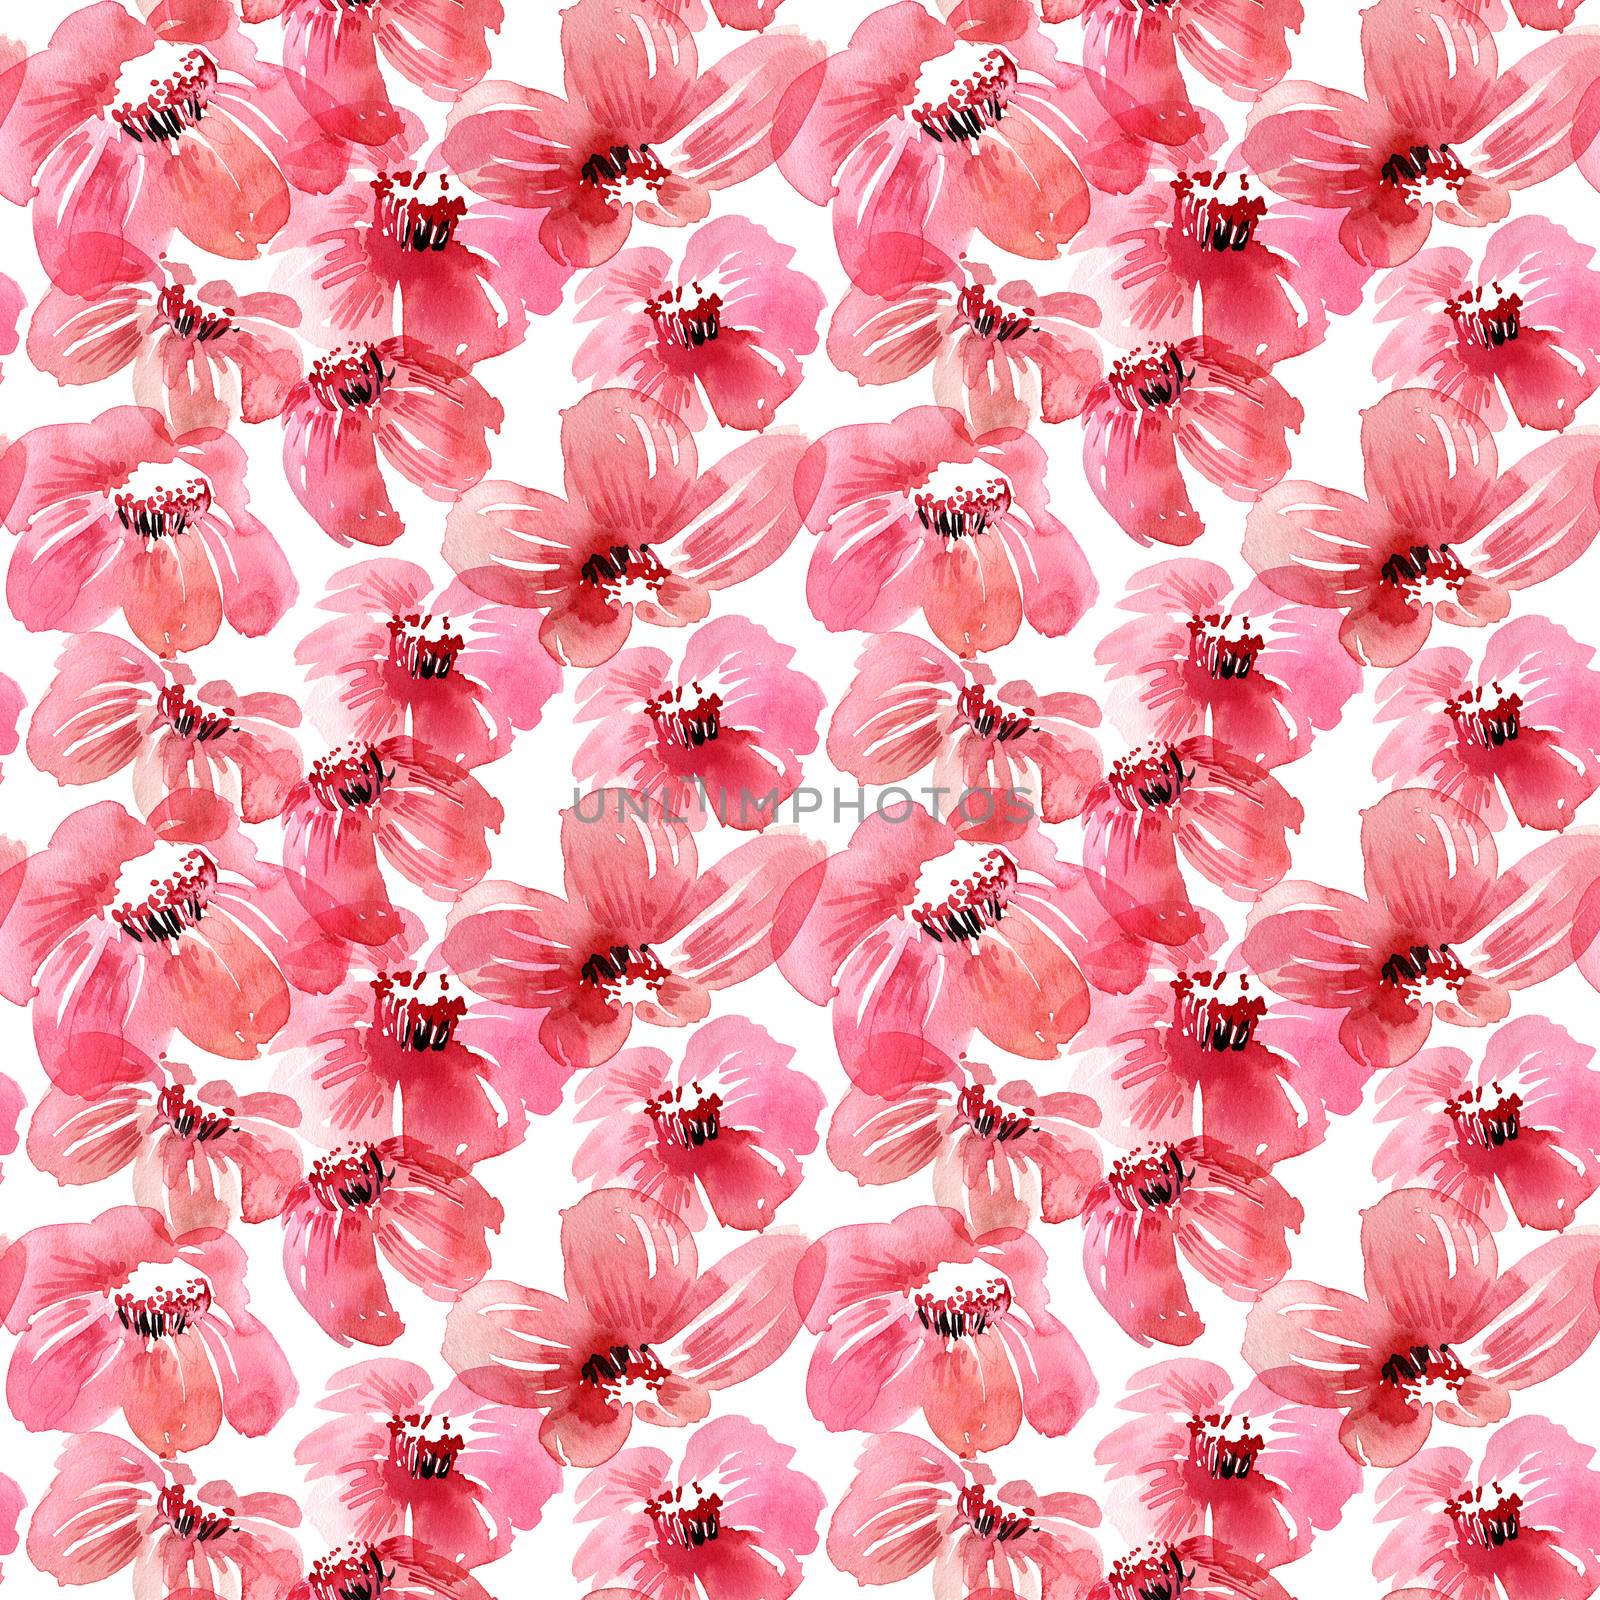 Watercolor flowers pattern by Olatarakanova